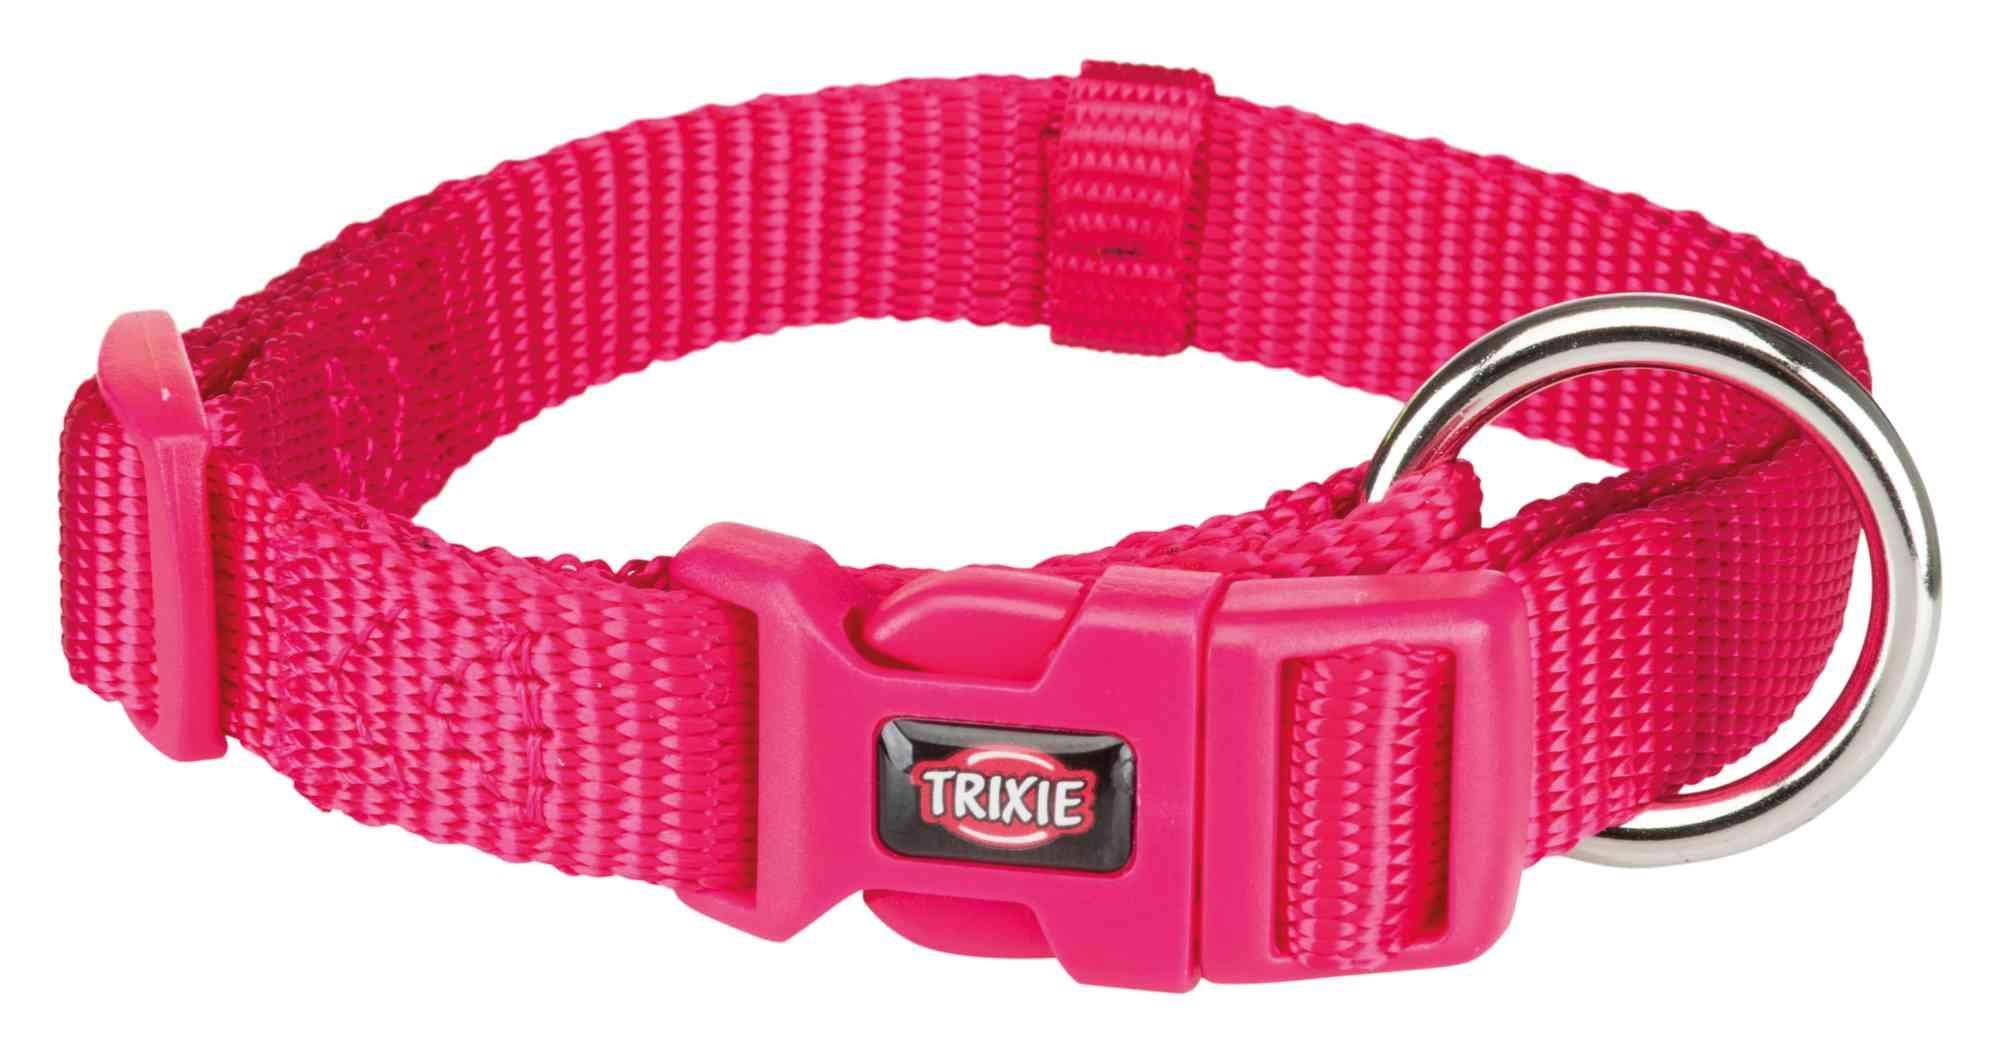 Trixie Premium Collar - Fuchsia, 30-45cm